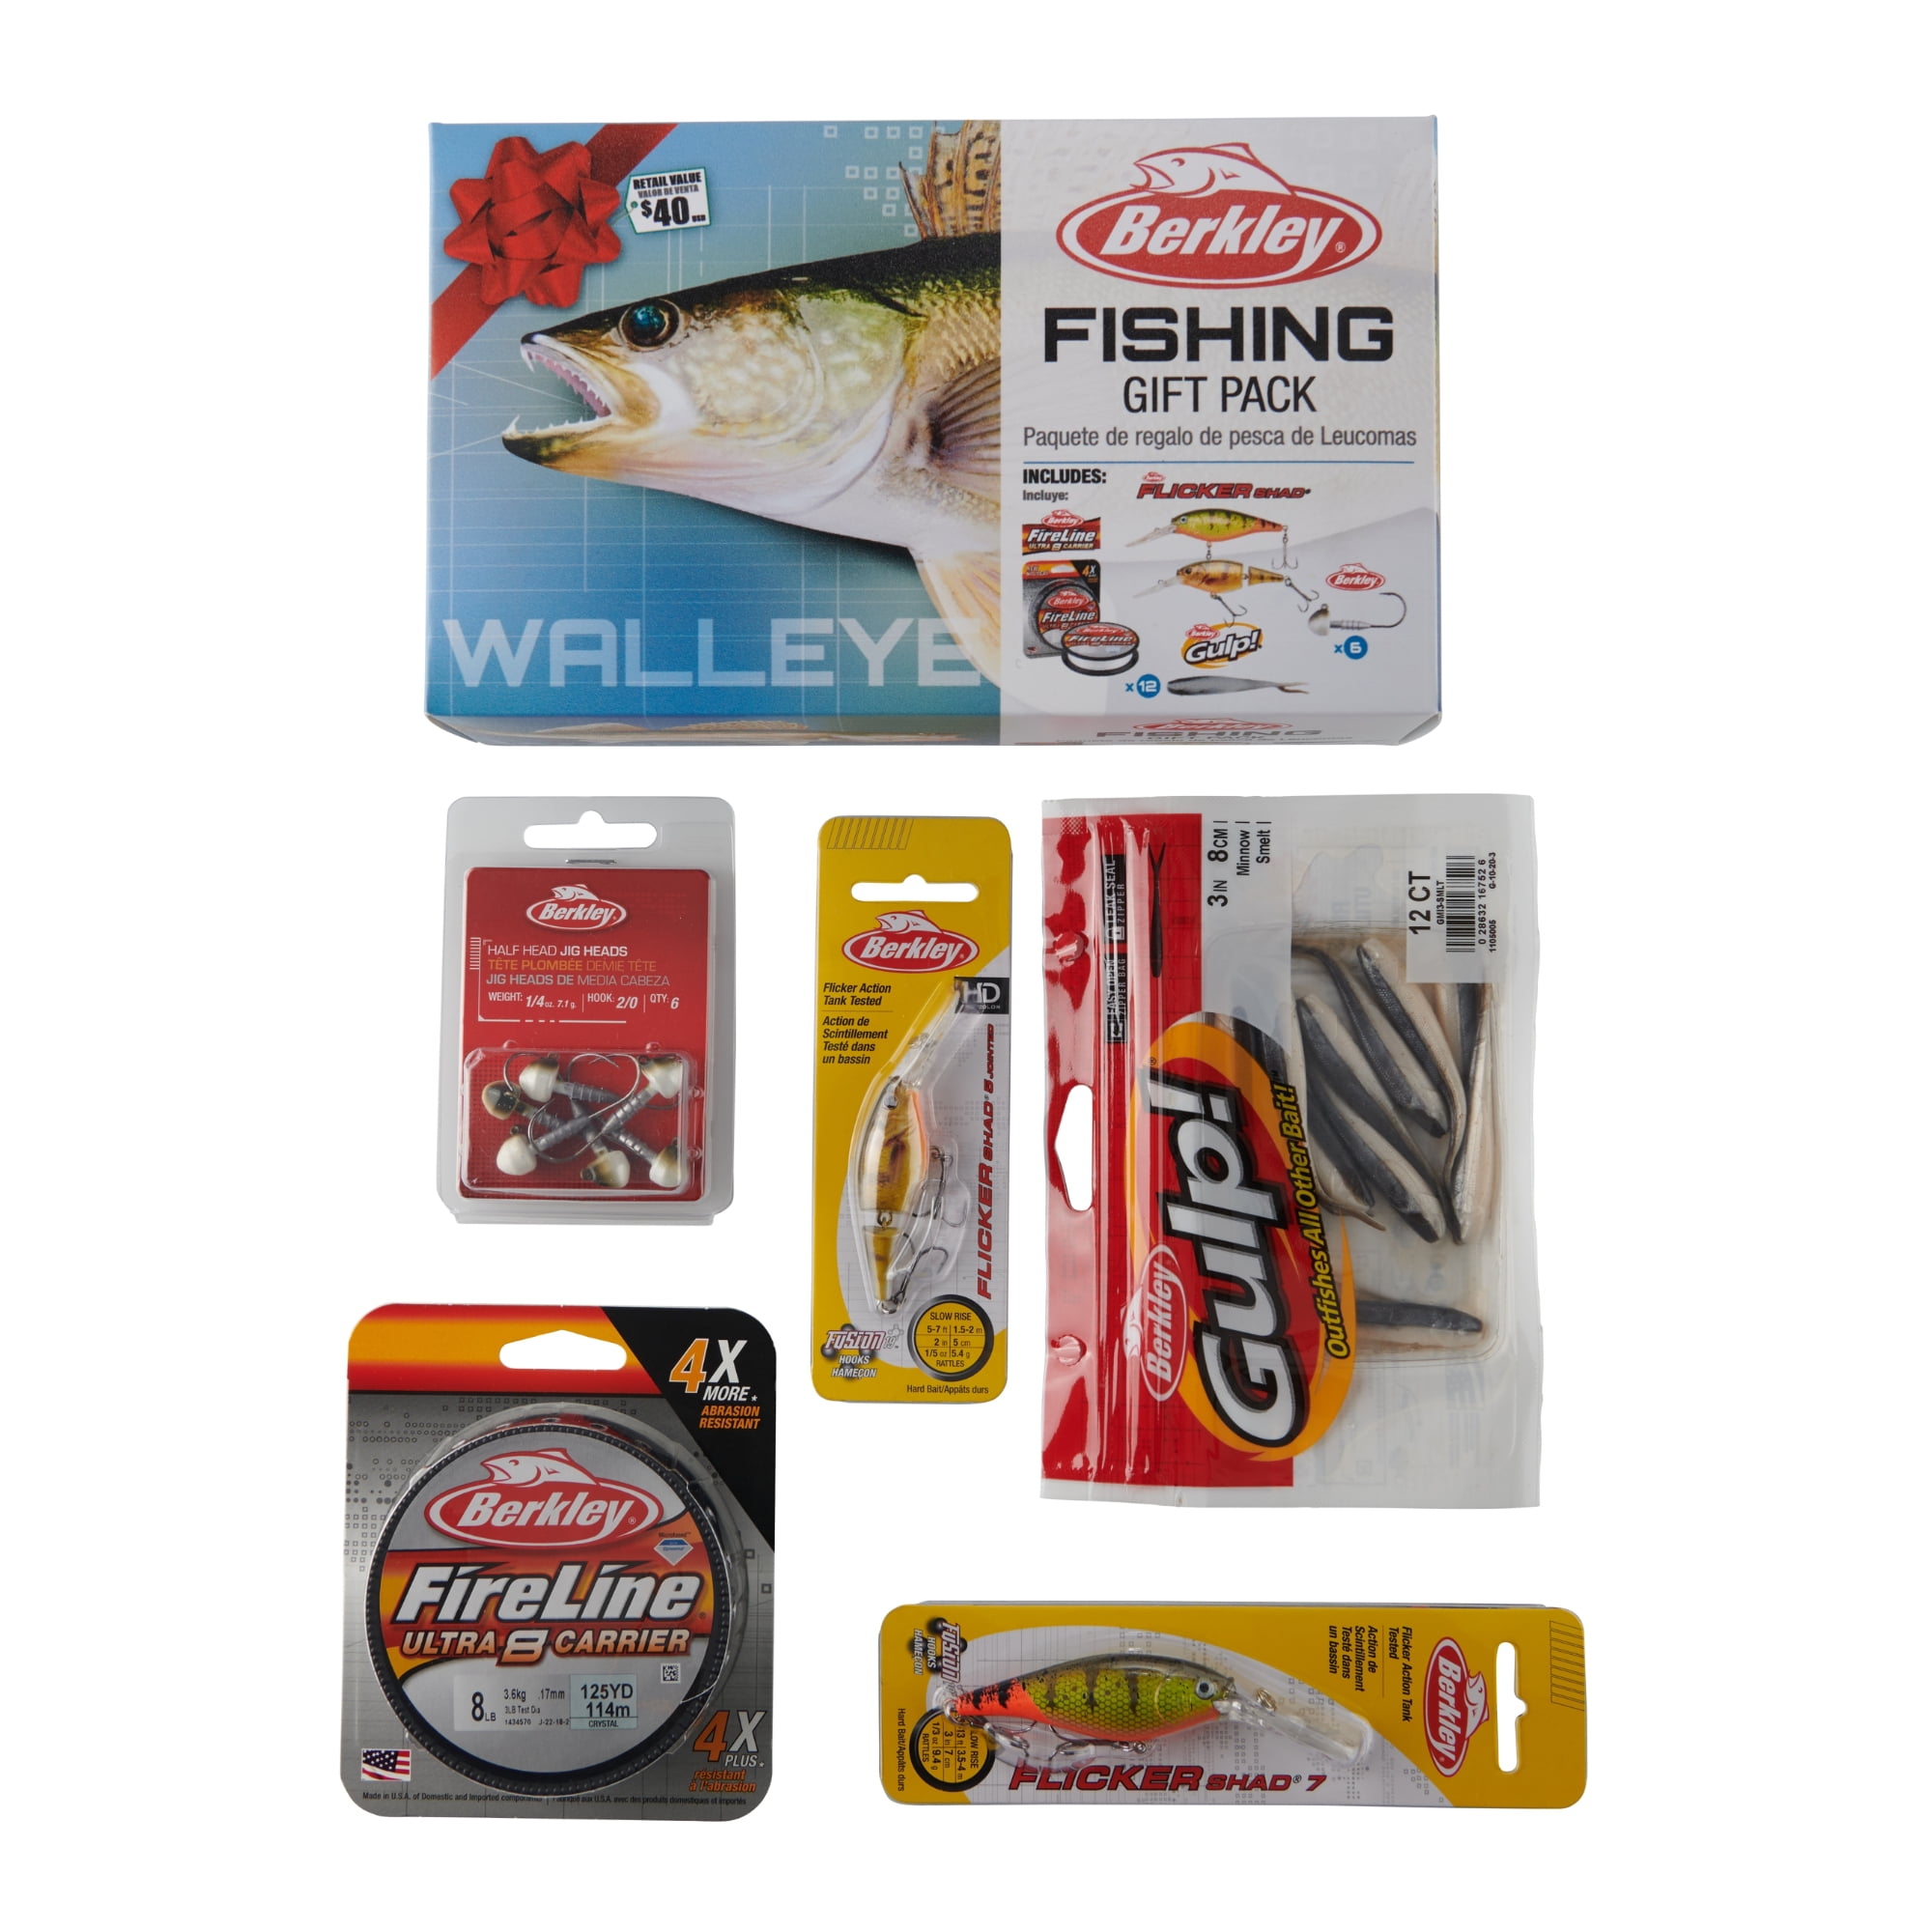 Berkley® Walleye Fishing Gift Pack, Multi Lures, Ultra 8 Carrier Line